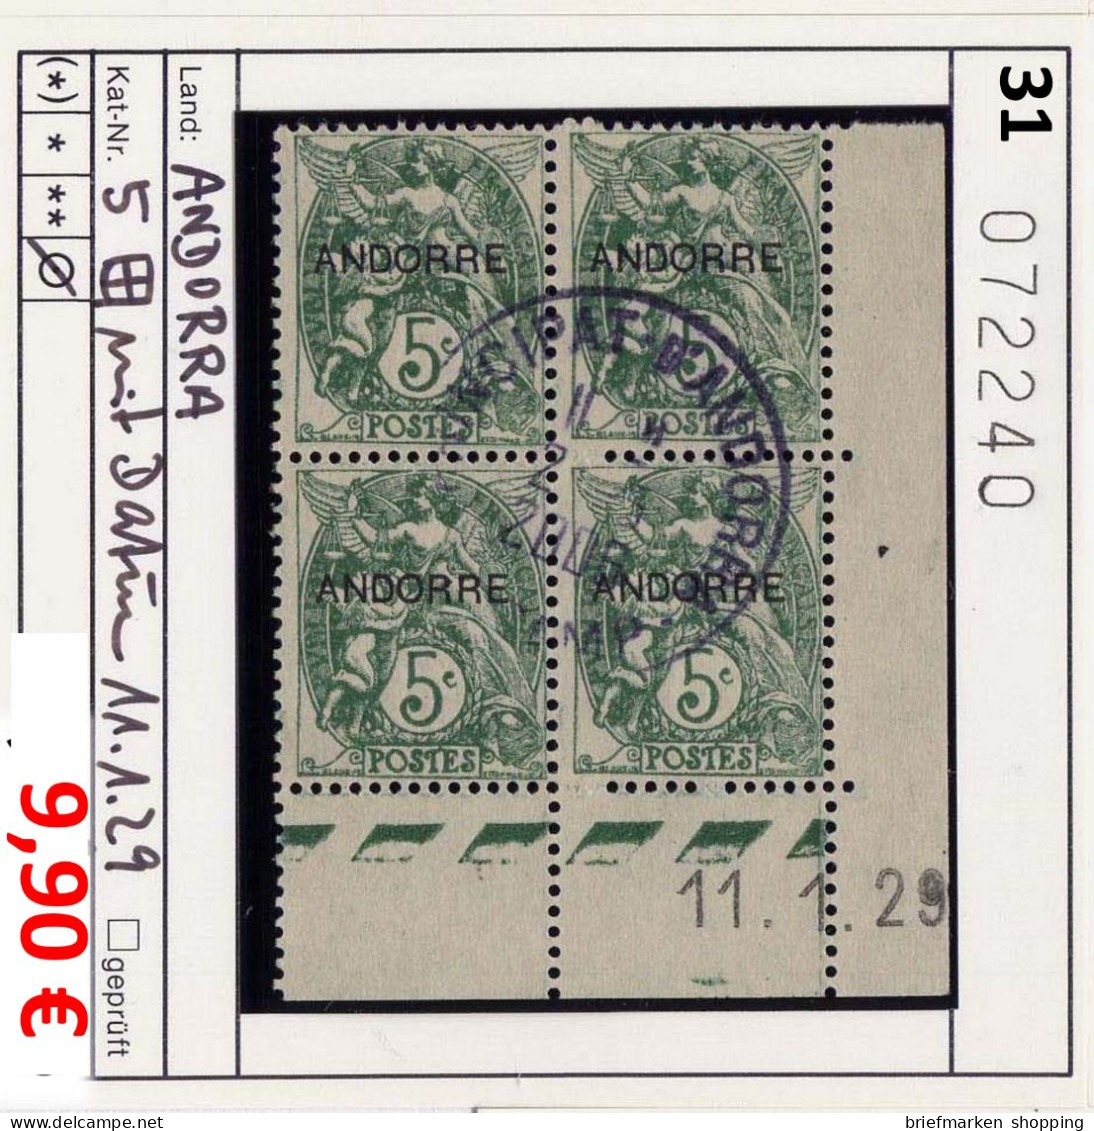 Andorra - Andorre -  Michel 5 Bloc De 4 Avec Coin Daté 11.1.29 - Oo Used Gebruik Oblit. - Used Stamps